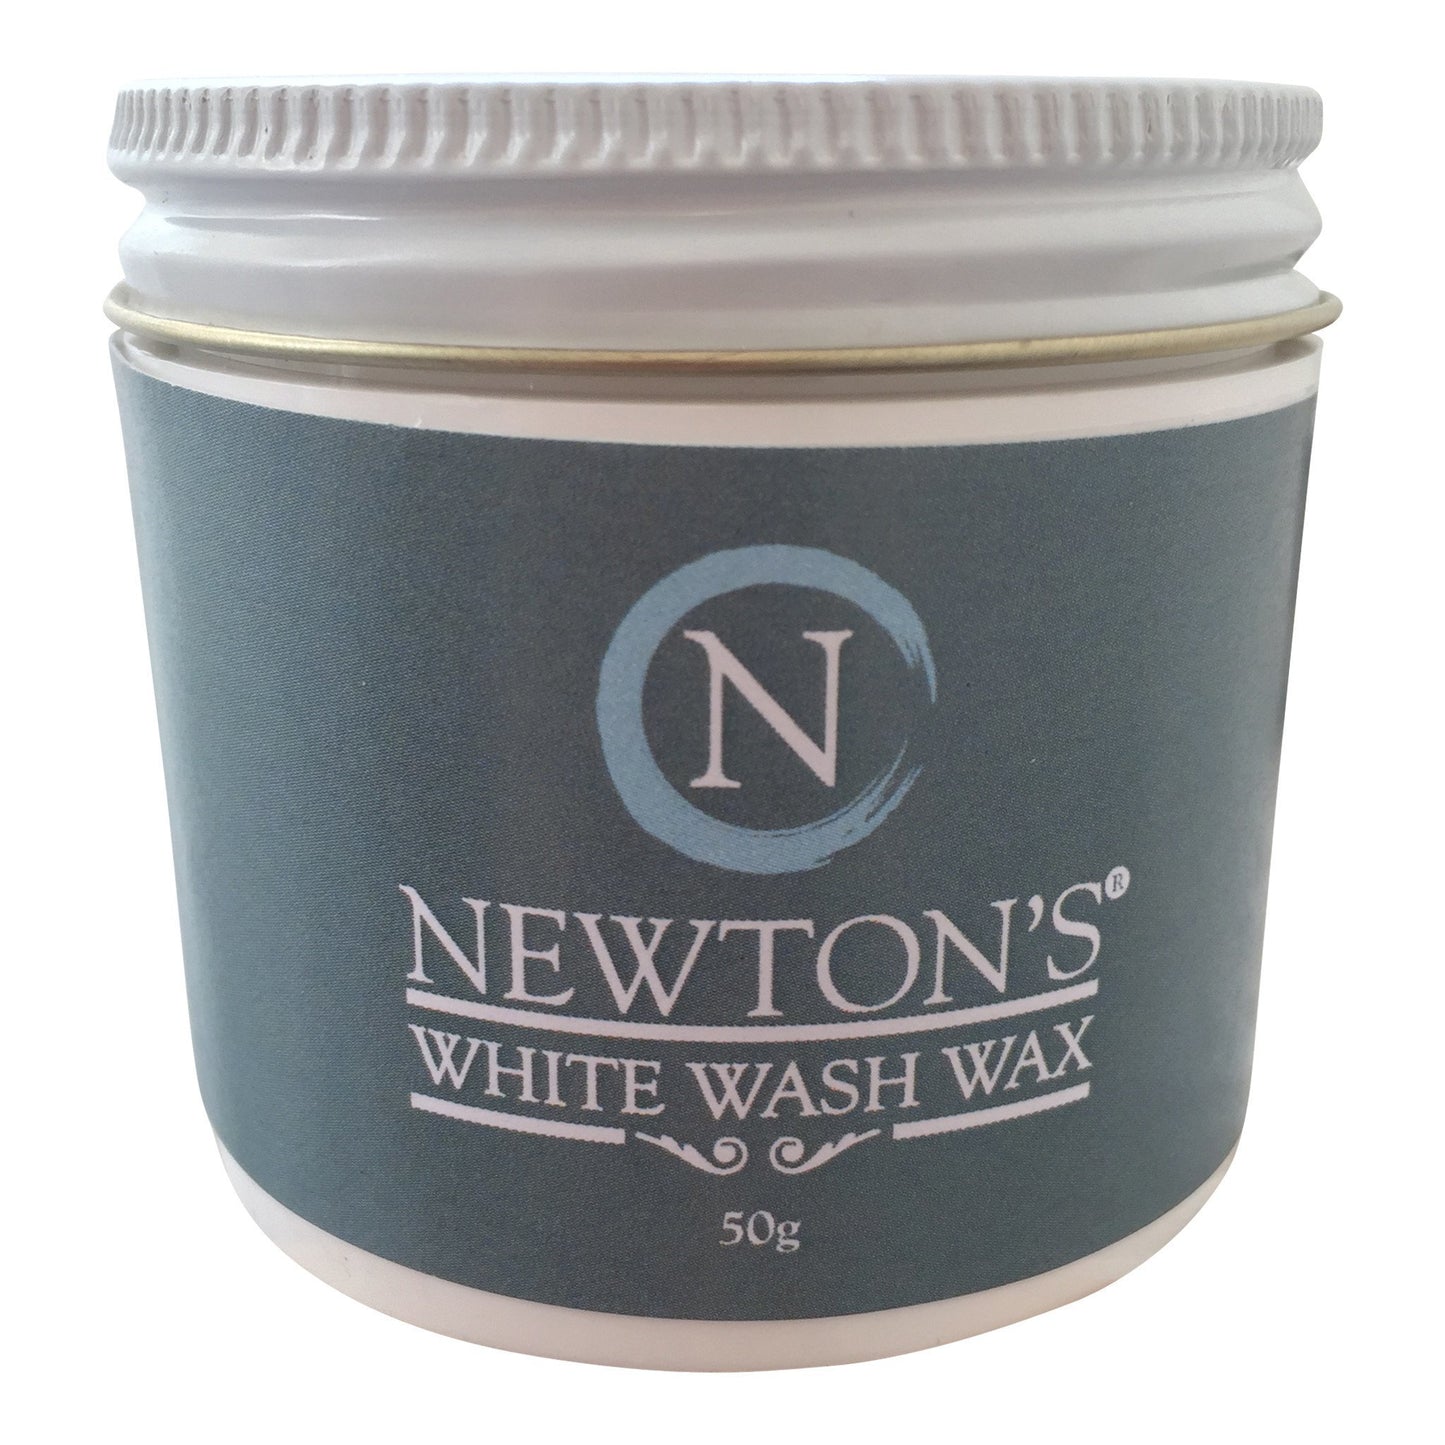 Whitewash wax white wax Newton's Chalk Paint 